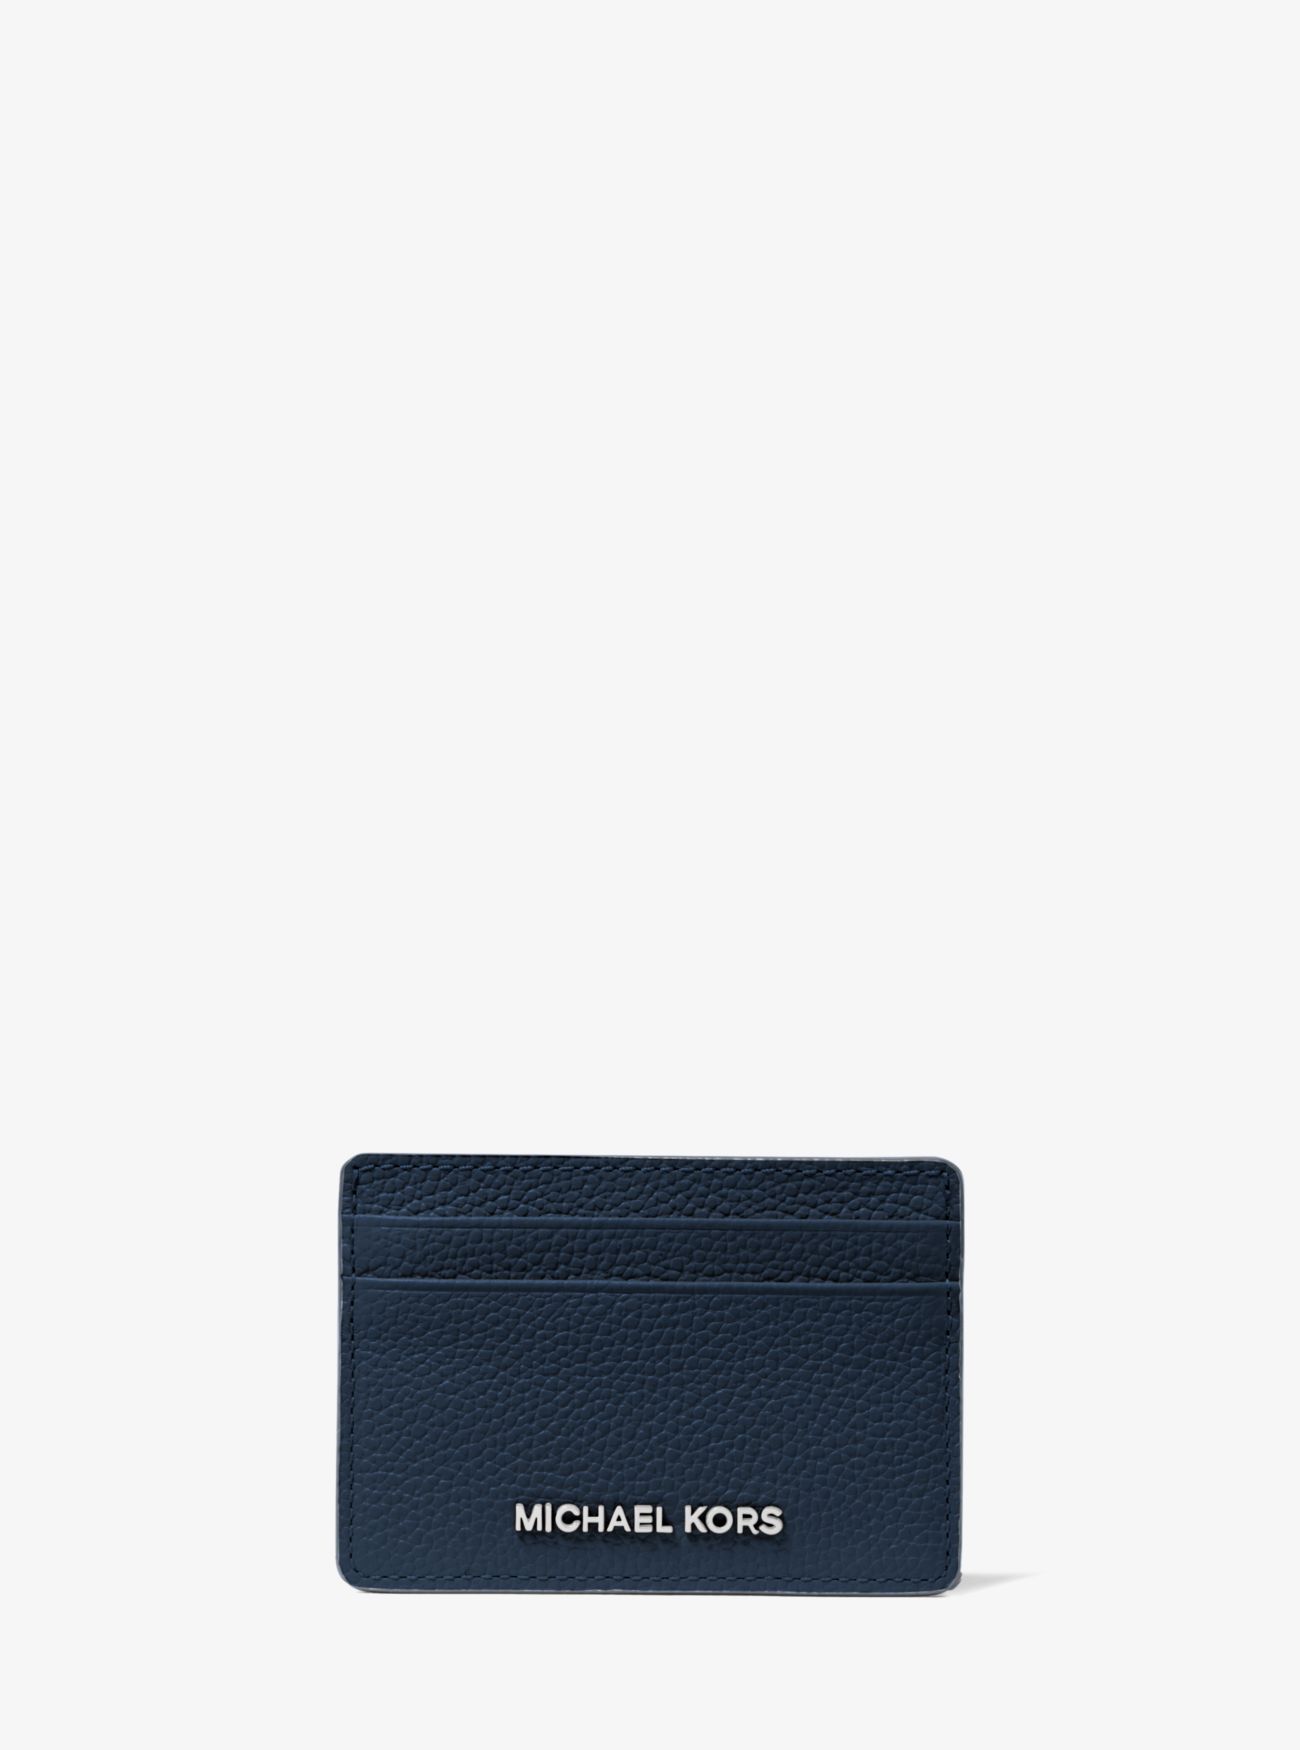 MK Pebbled Leather Card Case - Blue - Michael Kors